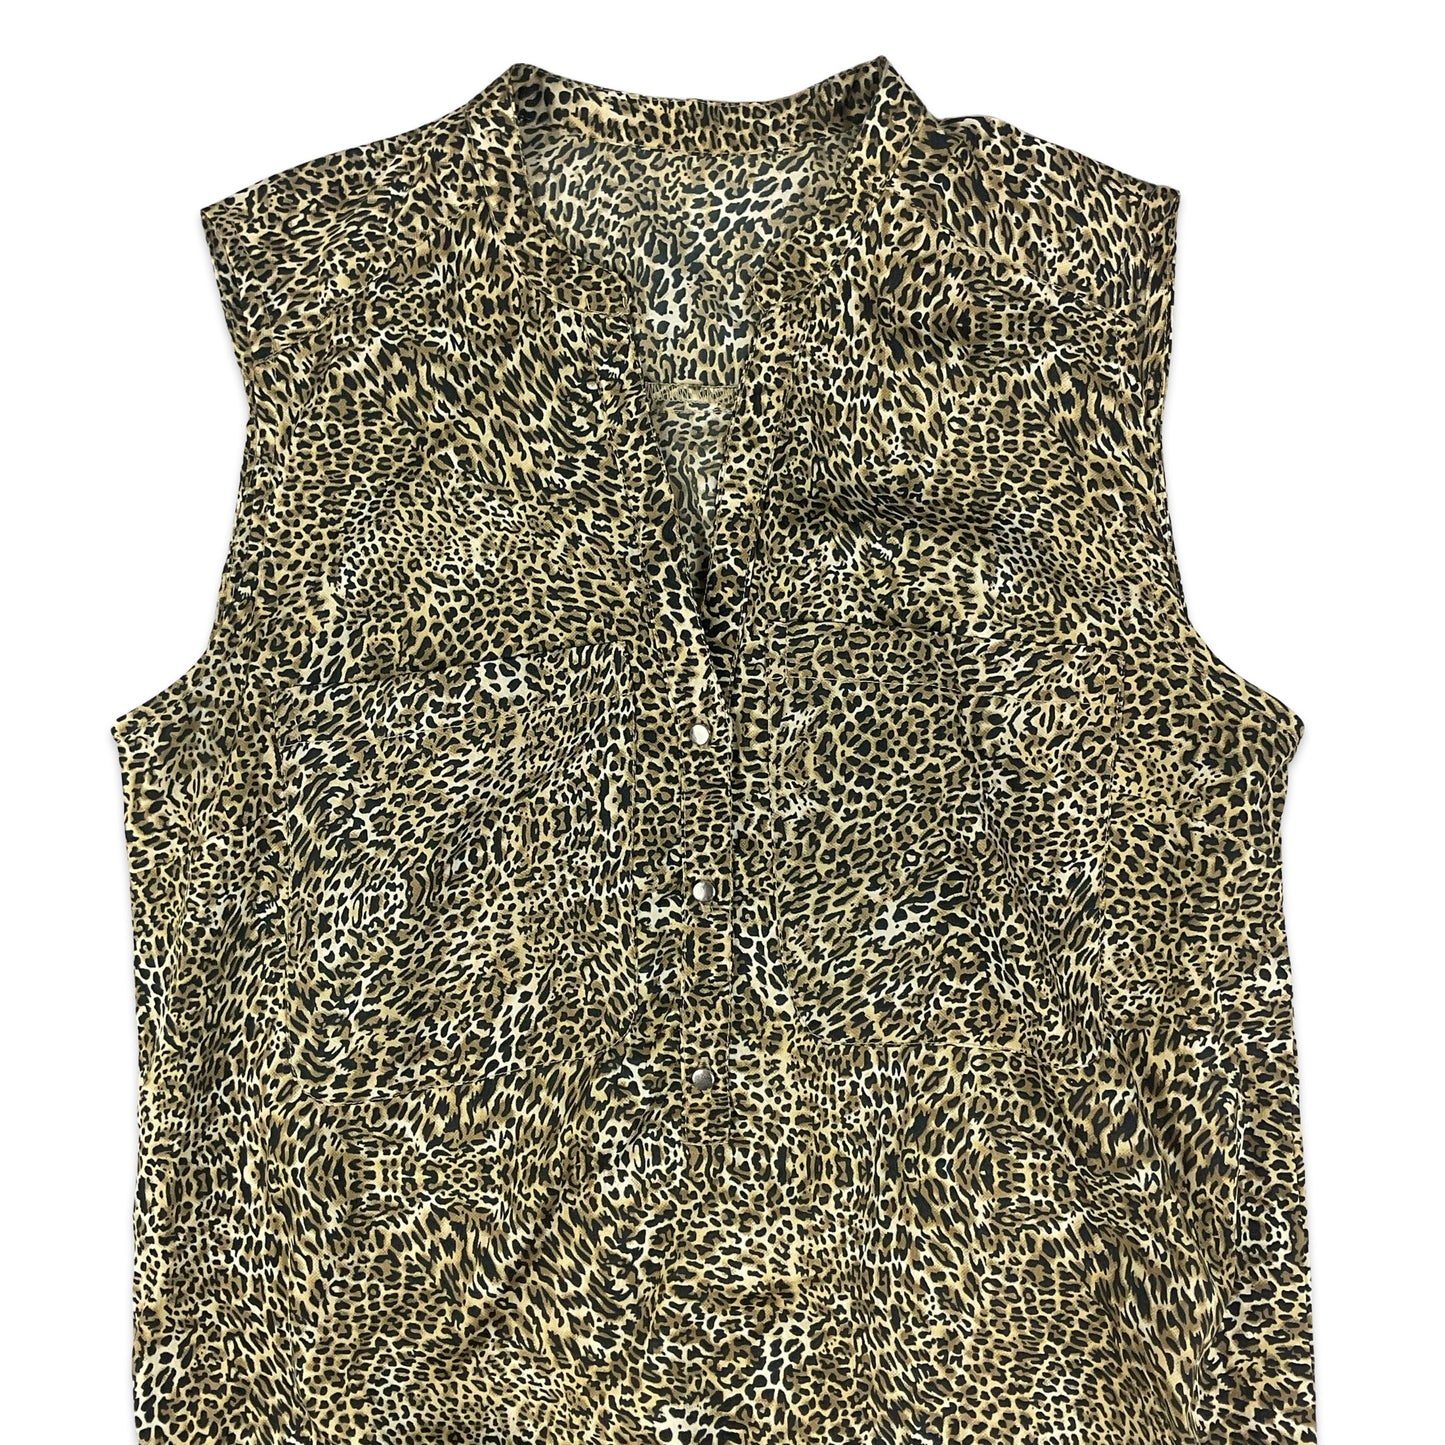 90s Cheetah Print Vest Top 6 8 10